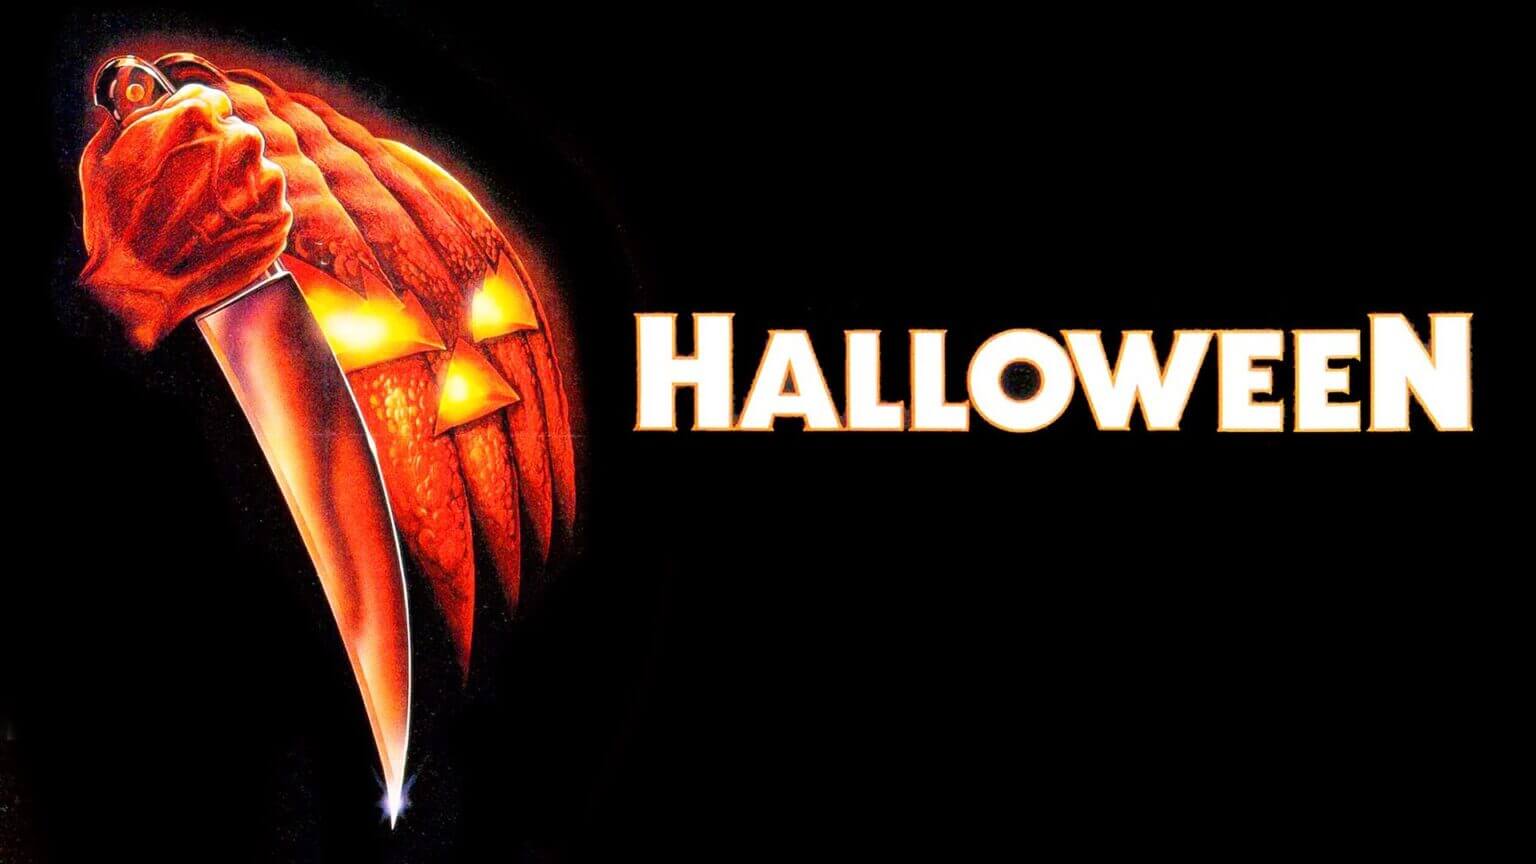 Halloween Movies Ranked